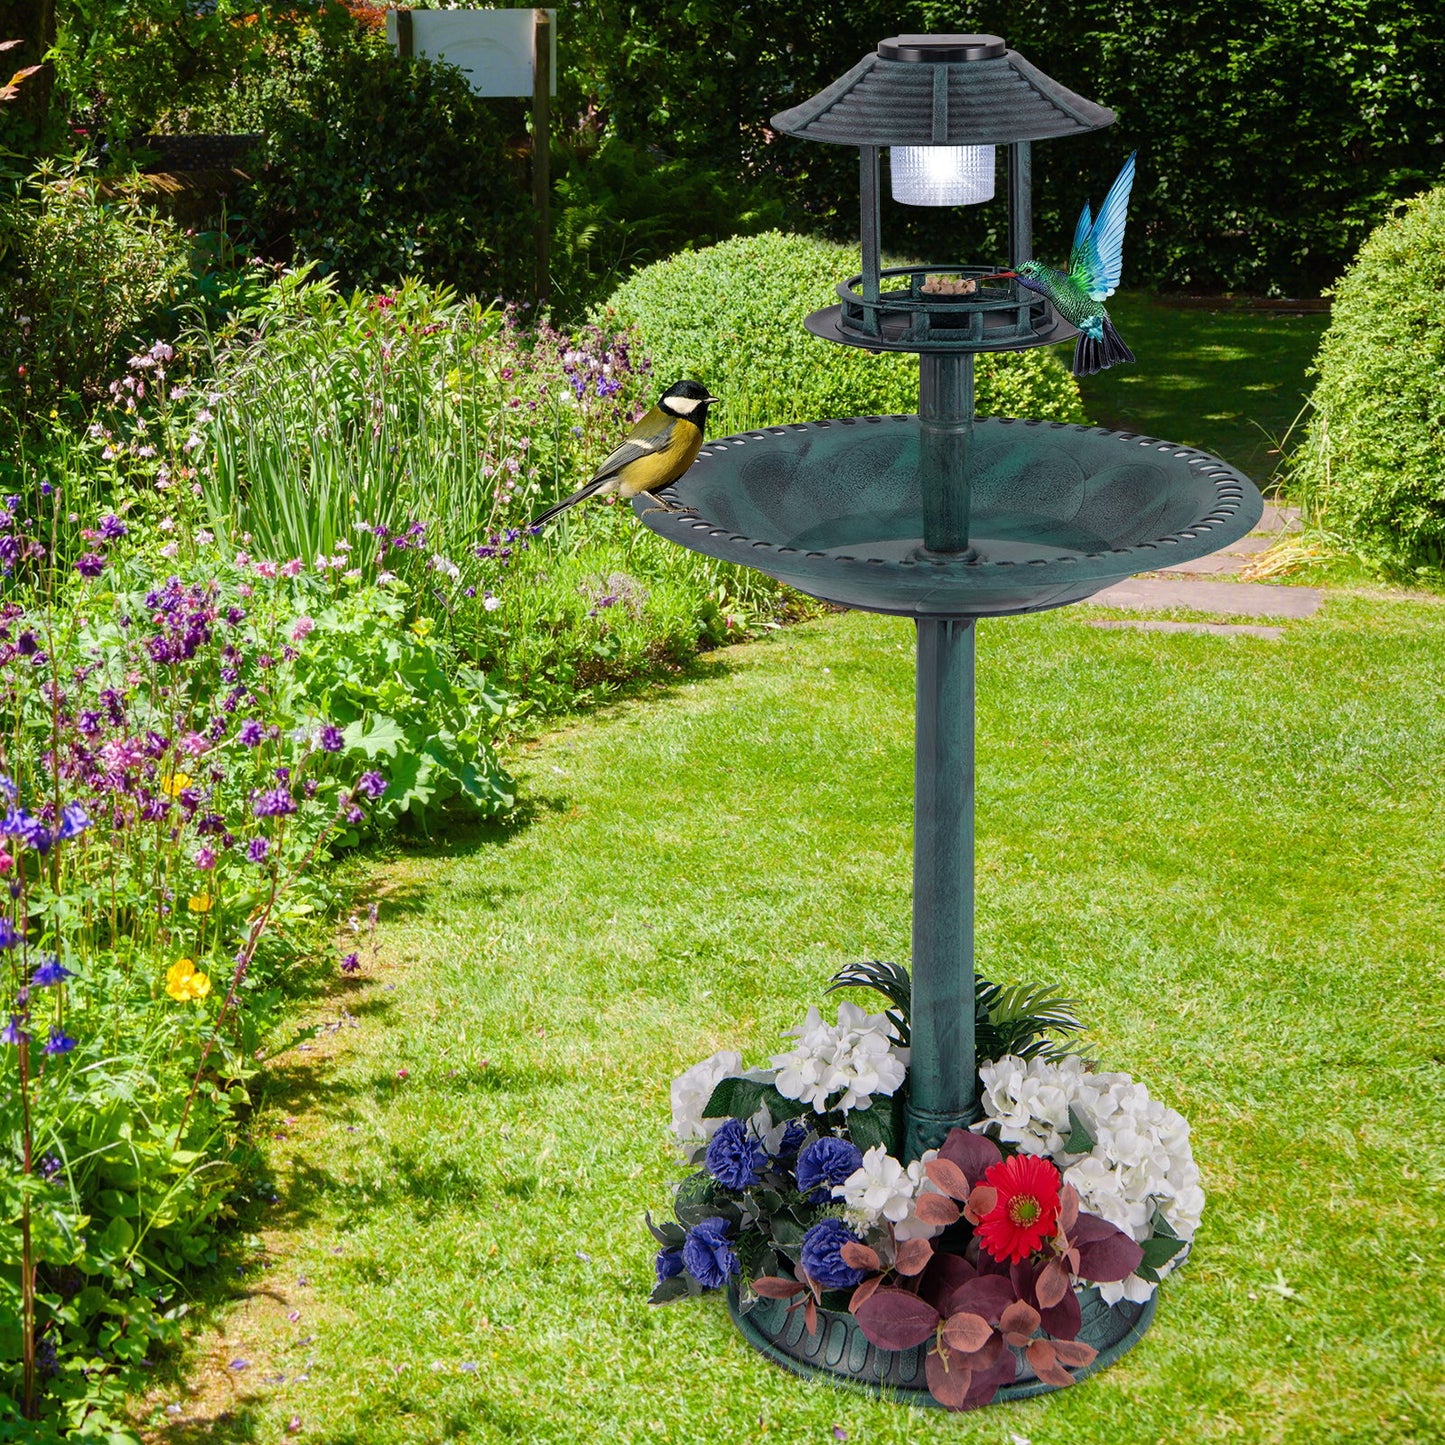 Pedestal Bird Bath with Solar Light with Bird Feeder and Flower Planter, Green